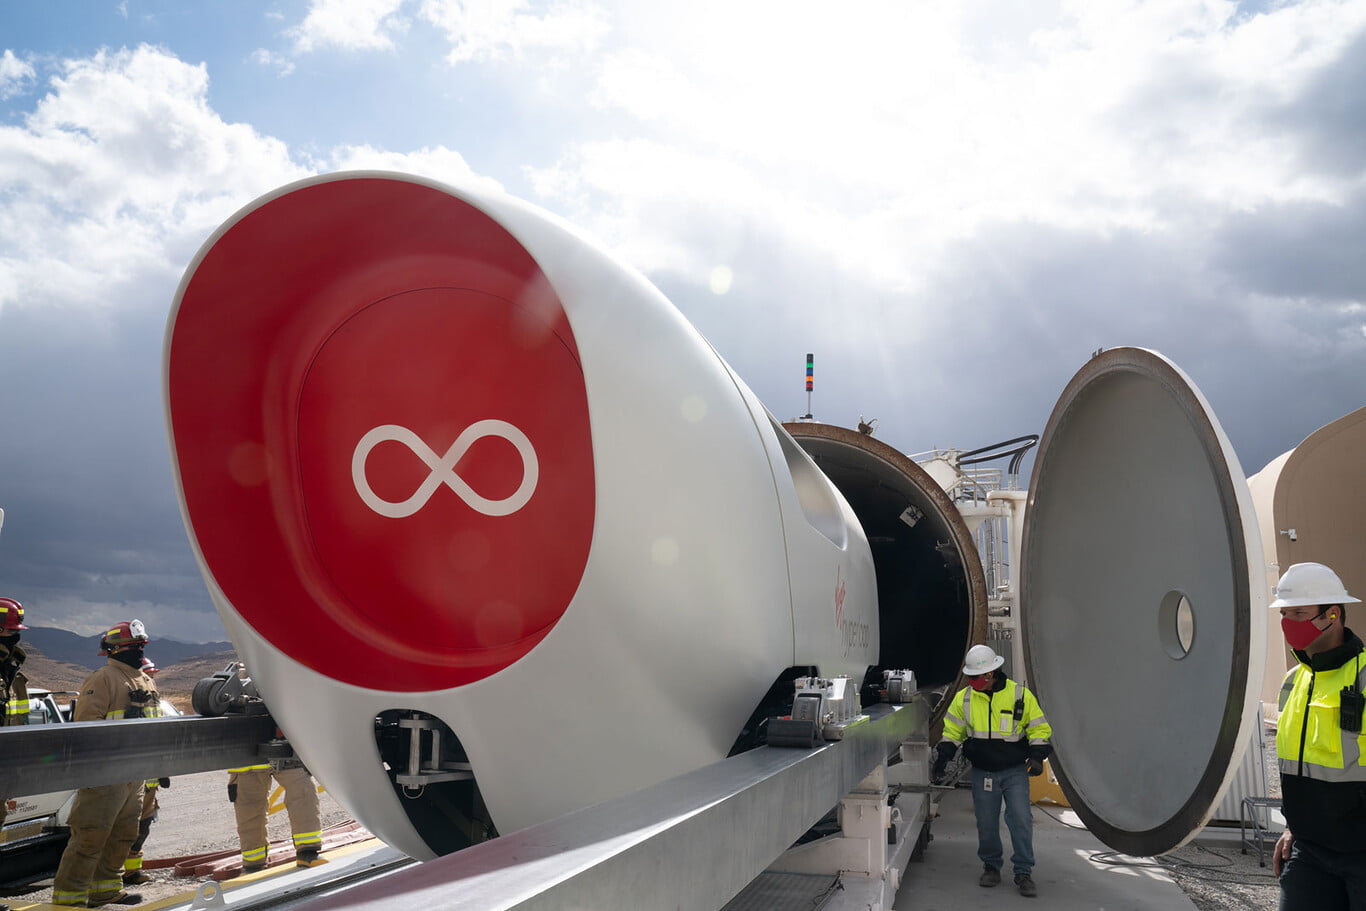 Hyperloop Virgin successfully makes its first passenger trip